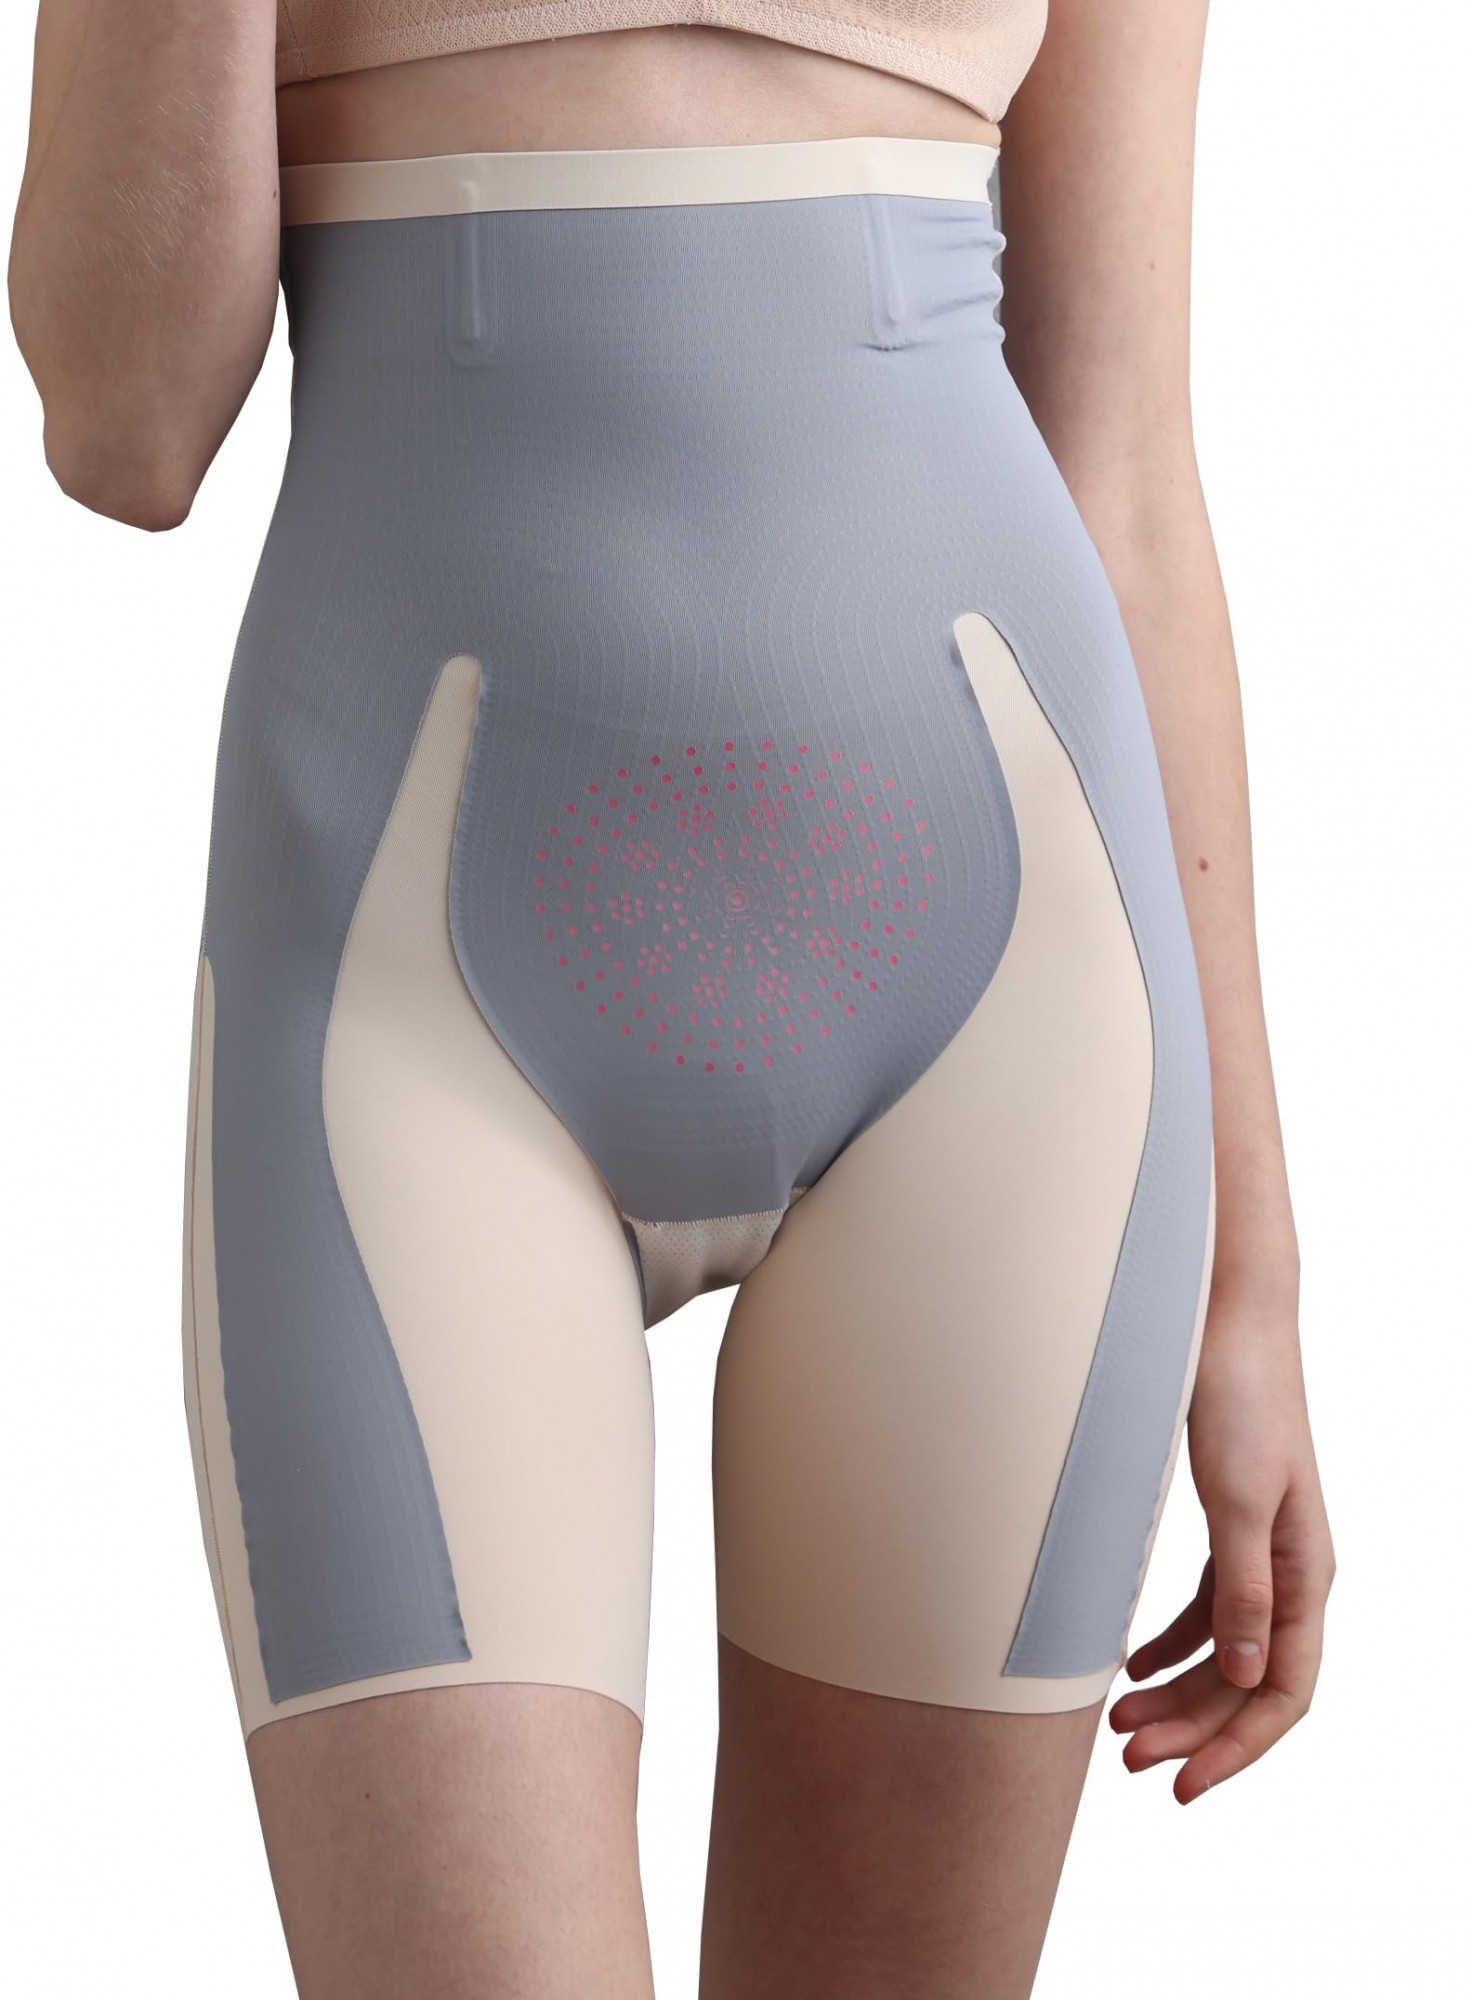 https://www.zebrs.com/uploads/zebrs/products/hsr-shapewear-for-women-tummy-control-shorts-high-waist-panty-mid-thigh-body-shaper-xl-creamsize-xl-181795287660345_l.jpg